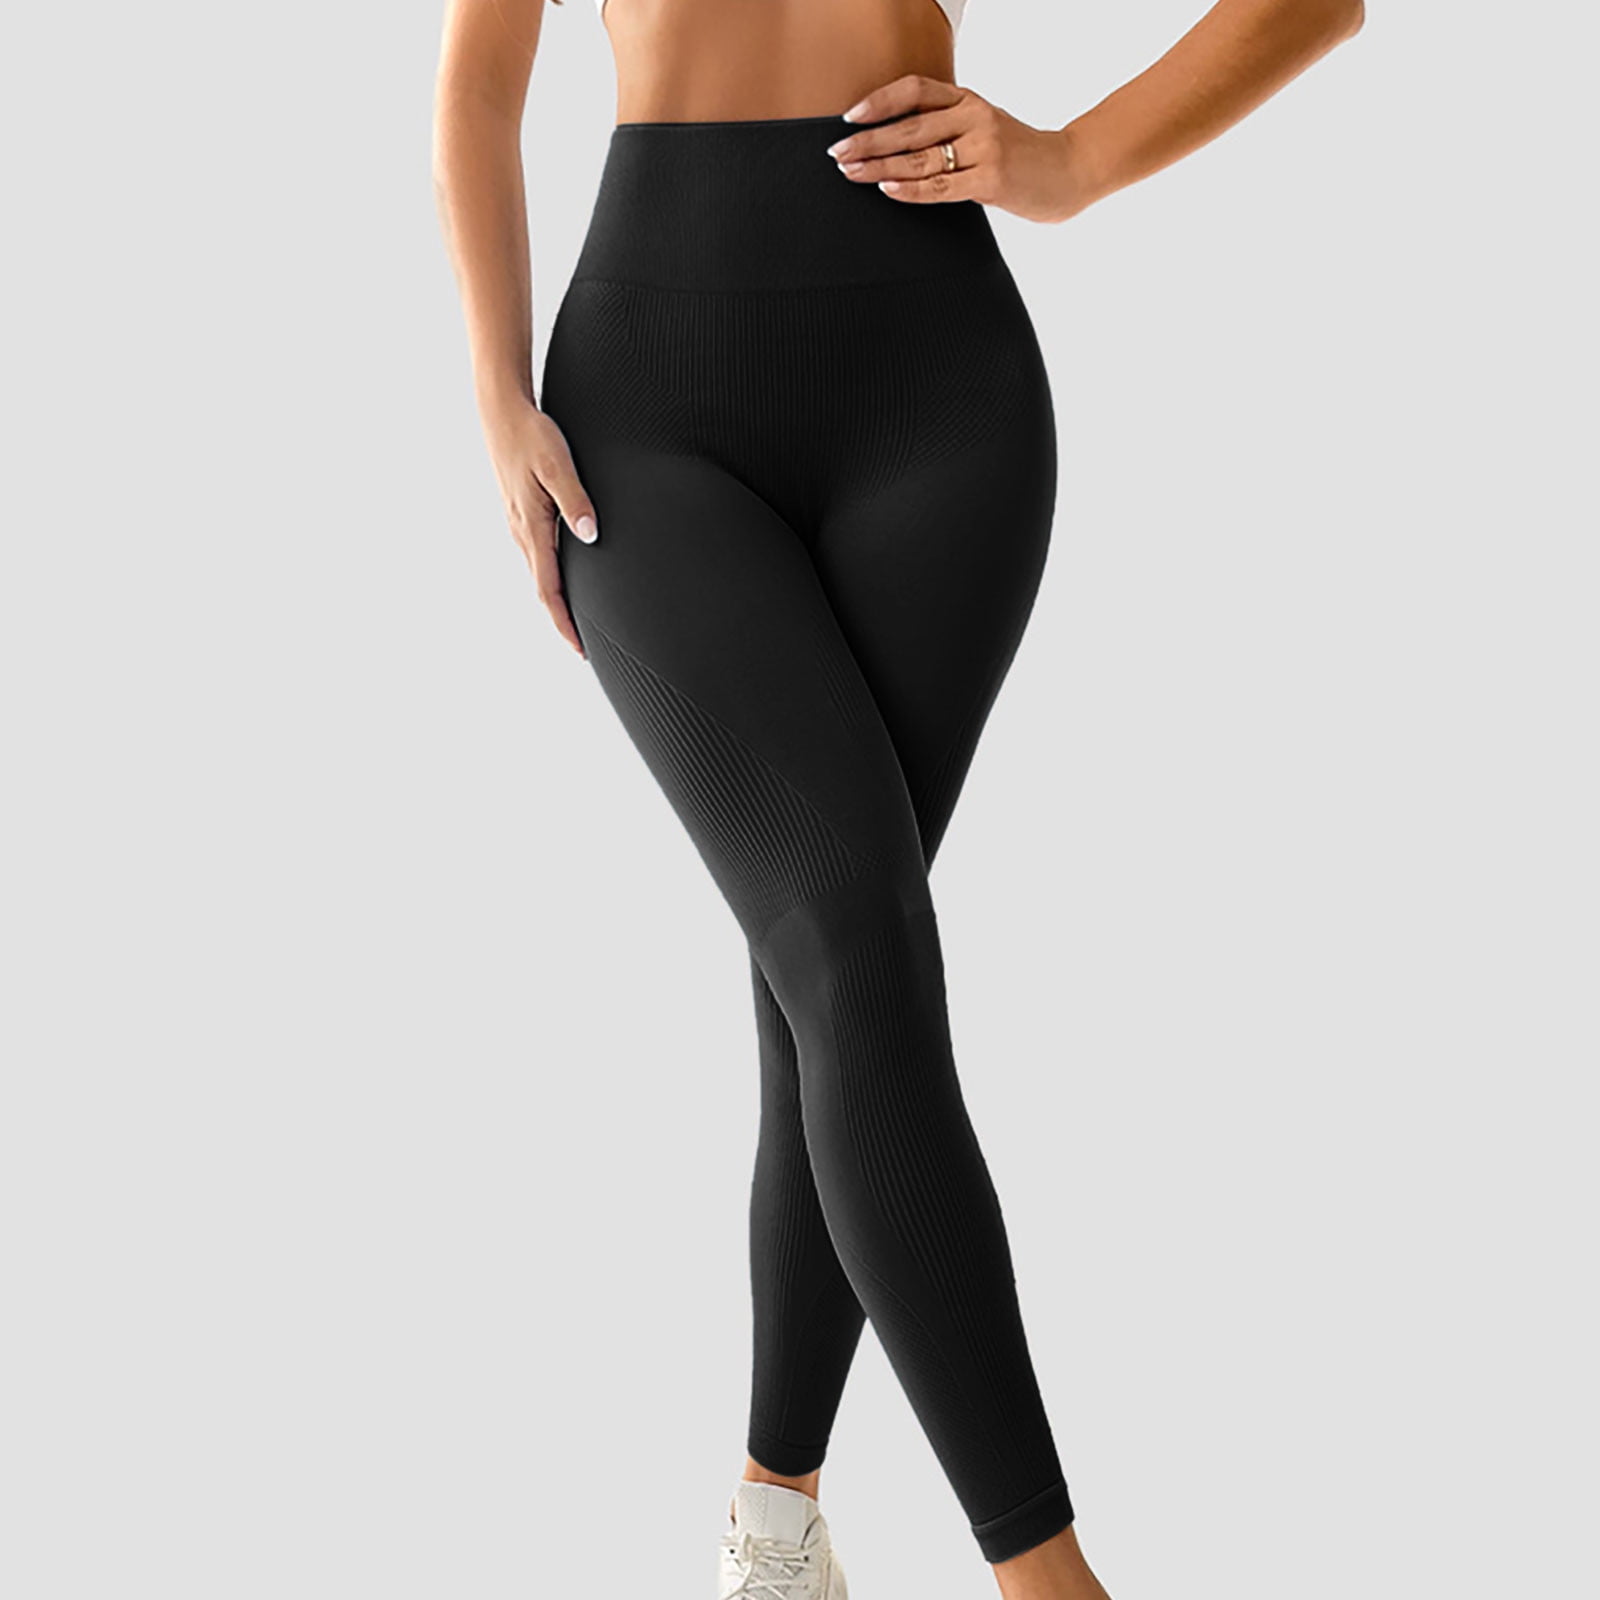 Lolmot Flared Leggings for Women Yoga Pants Plus Size Casual Solid Color  Elastic High Waist Slim Pants Yoga Stretch Pencil Pants Bootleg Gym Workout